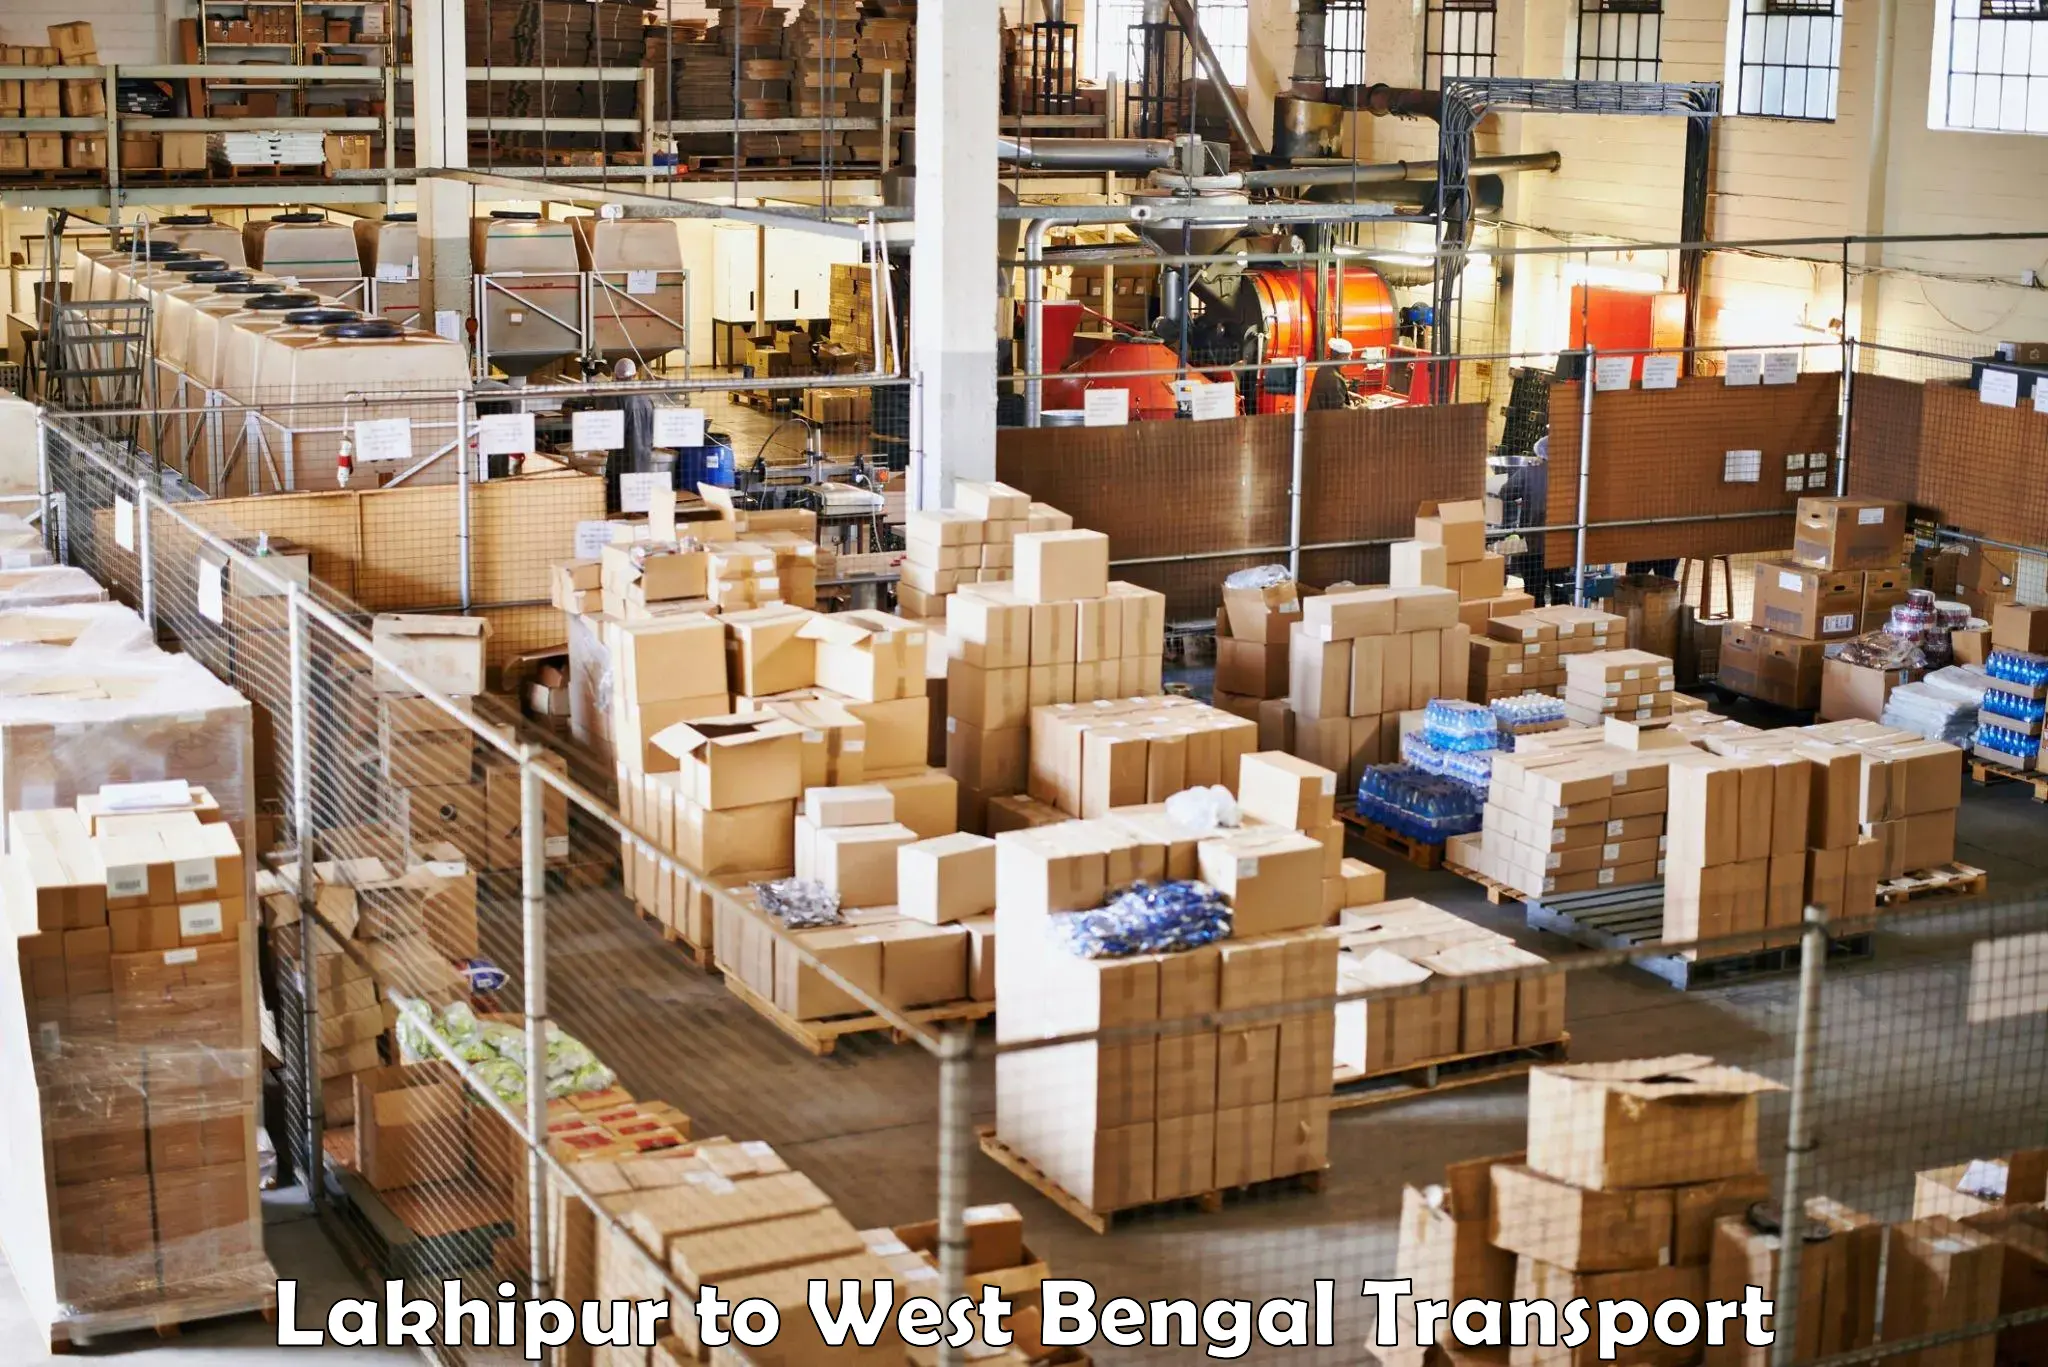 Shipping partner Lakhipur to West Bengal